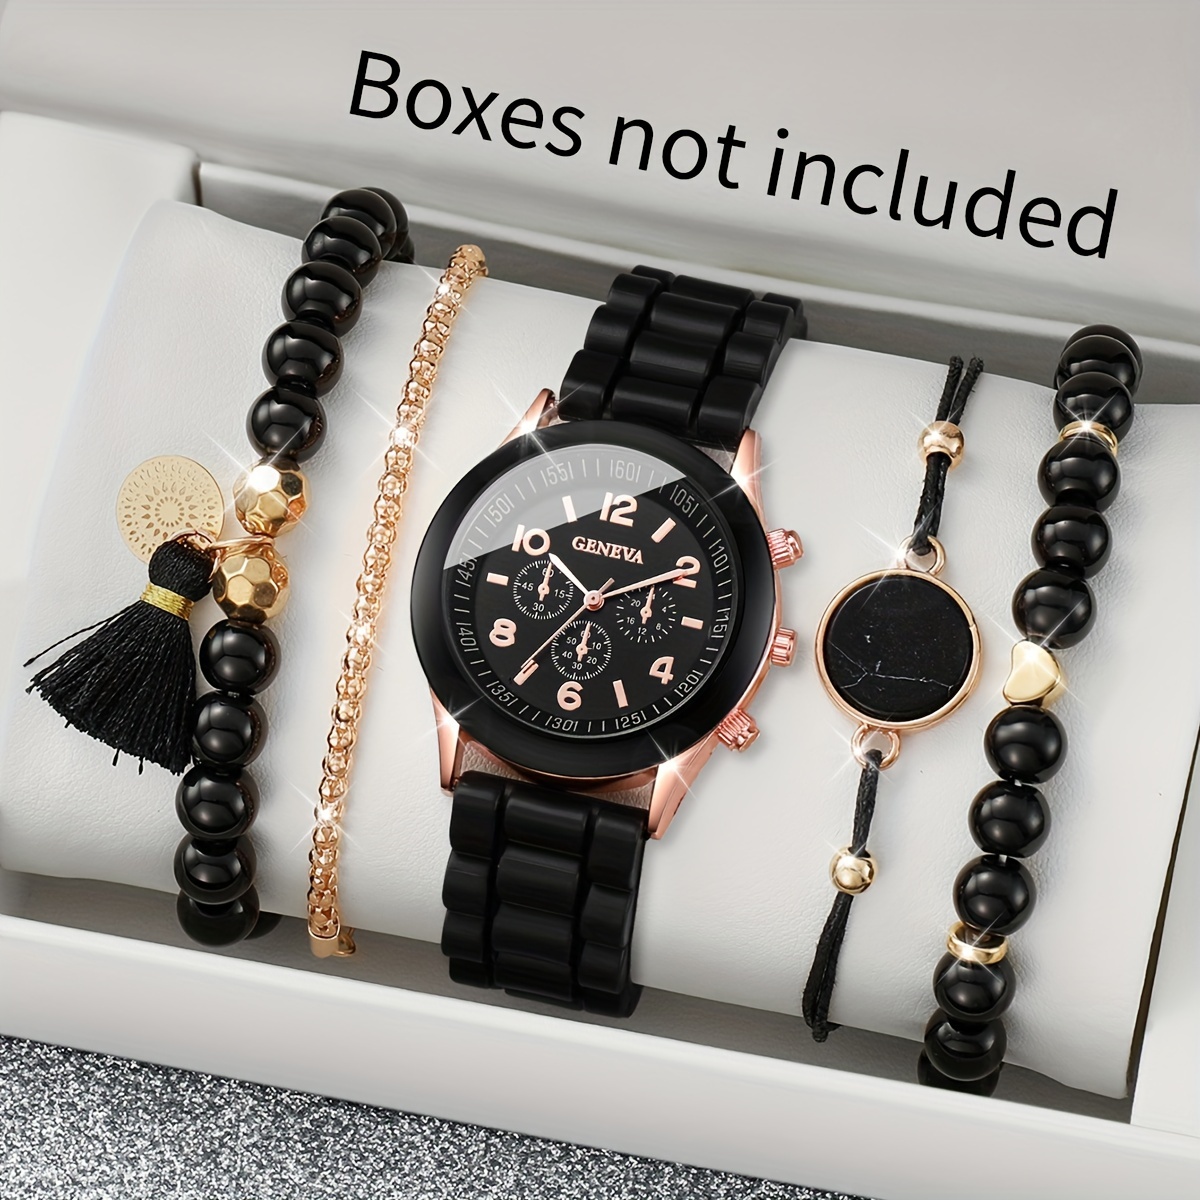 

5pcs/set Women's Casual Fashion Quartz Watch Analog Silicone Band Wrist Watch & Bracelets, Gift For Mom Her